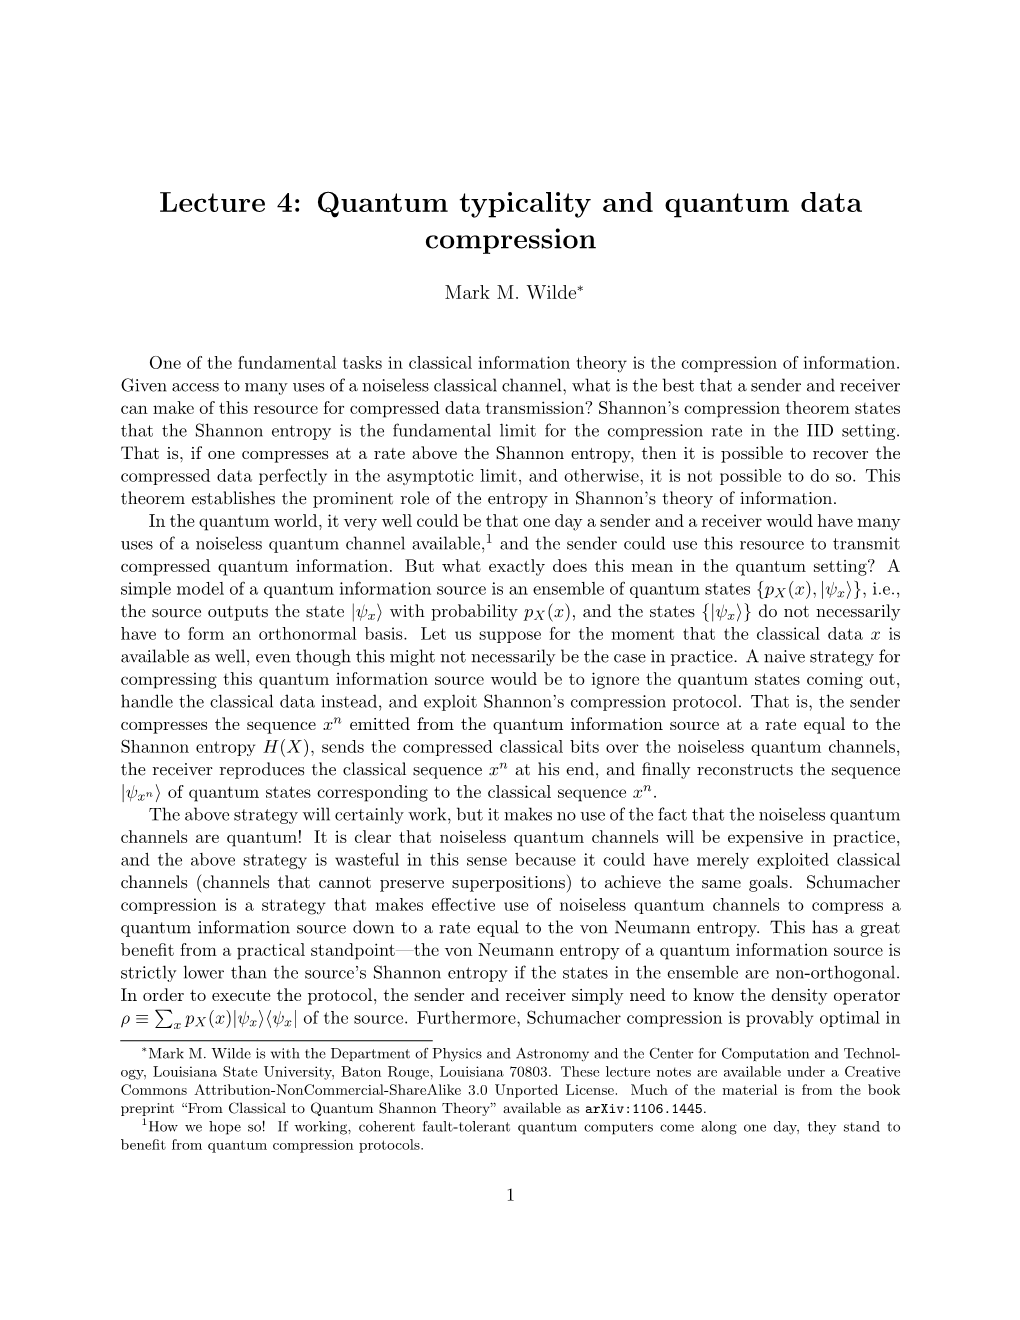 Lecture 4: Quantum Typicality and Quantum Data Compression